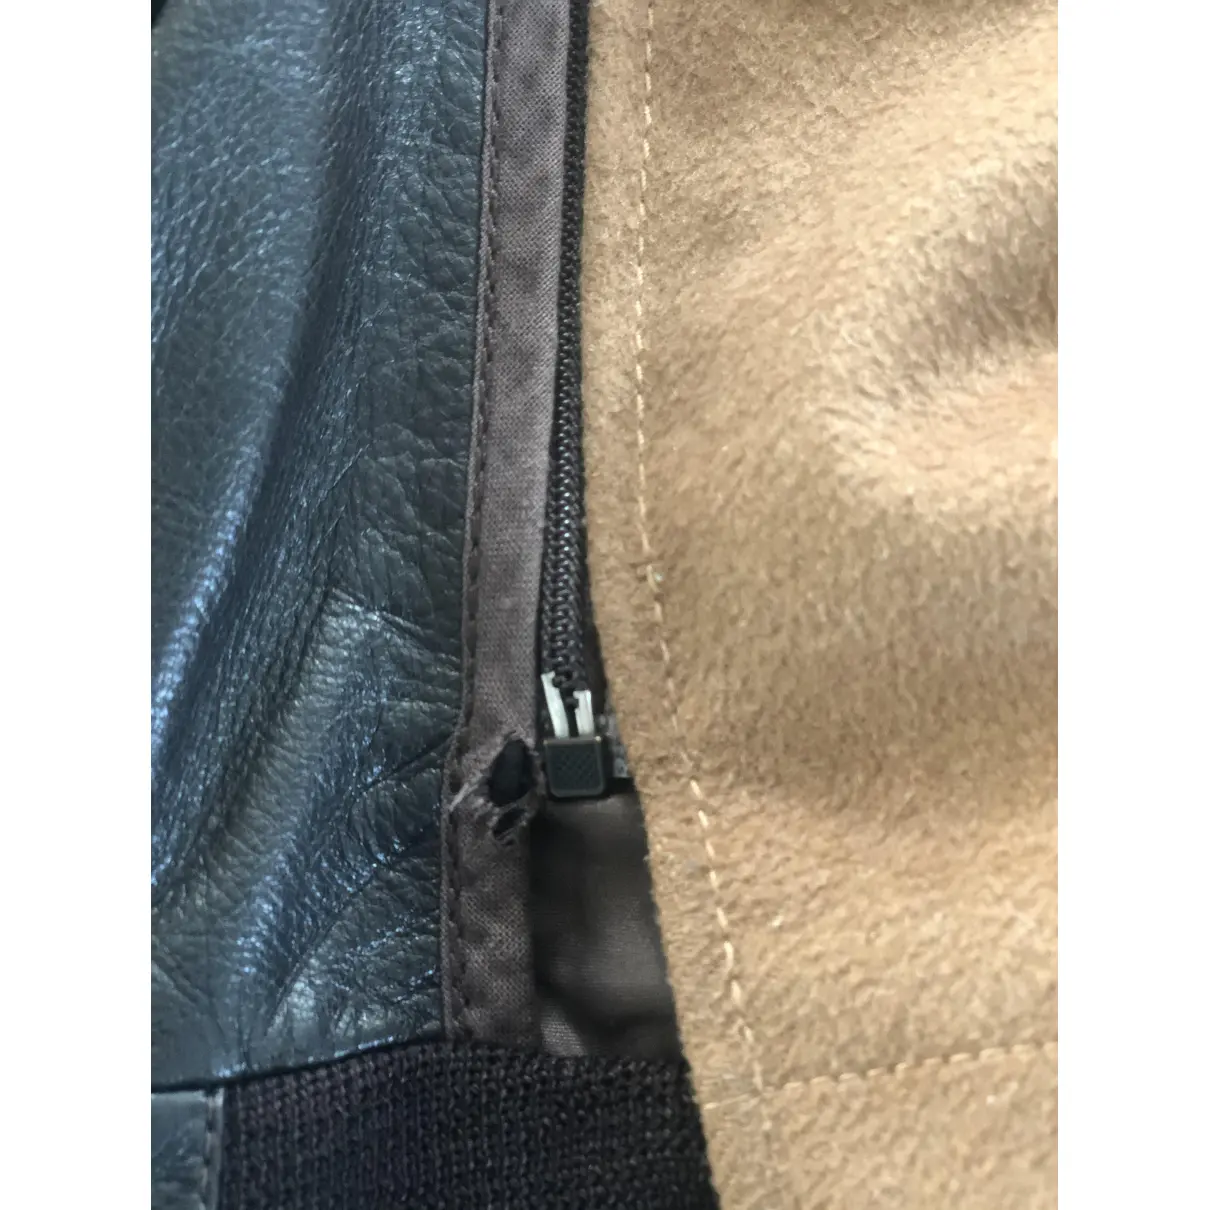 Leather jacket Mac Douglas - Vintage